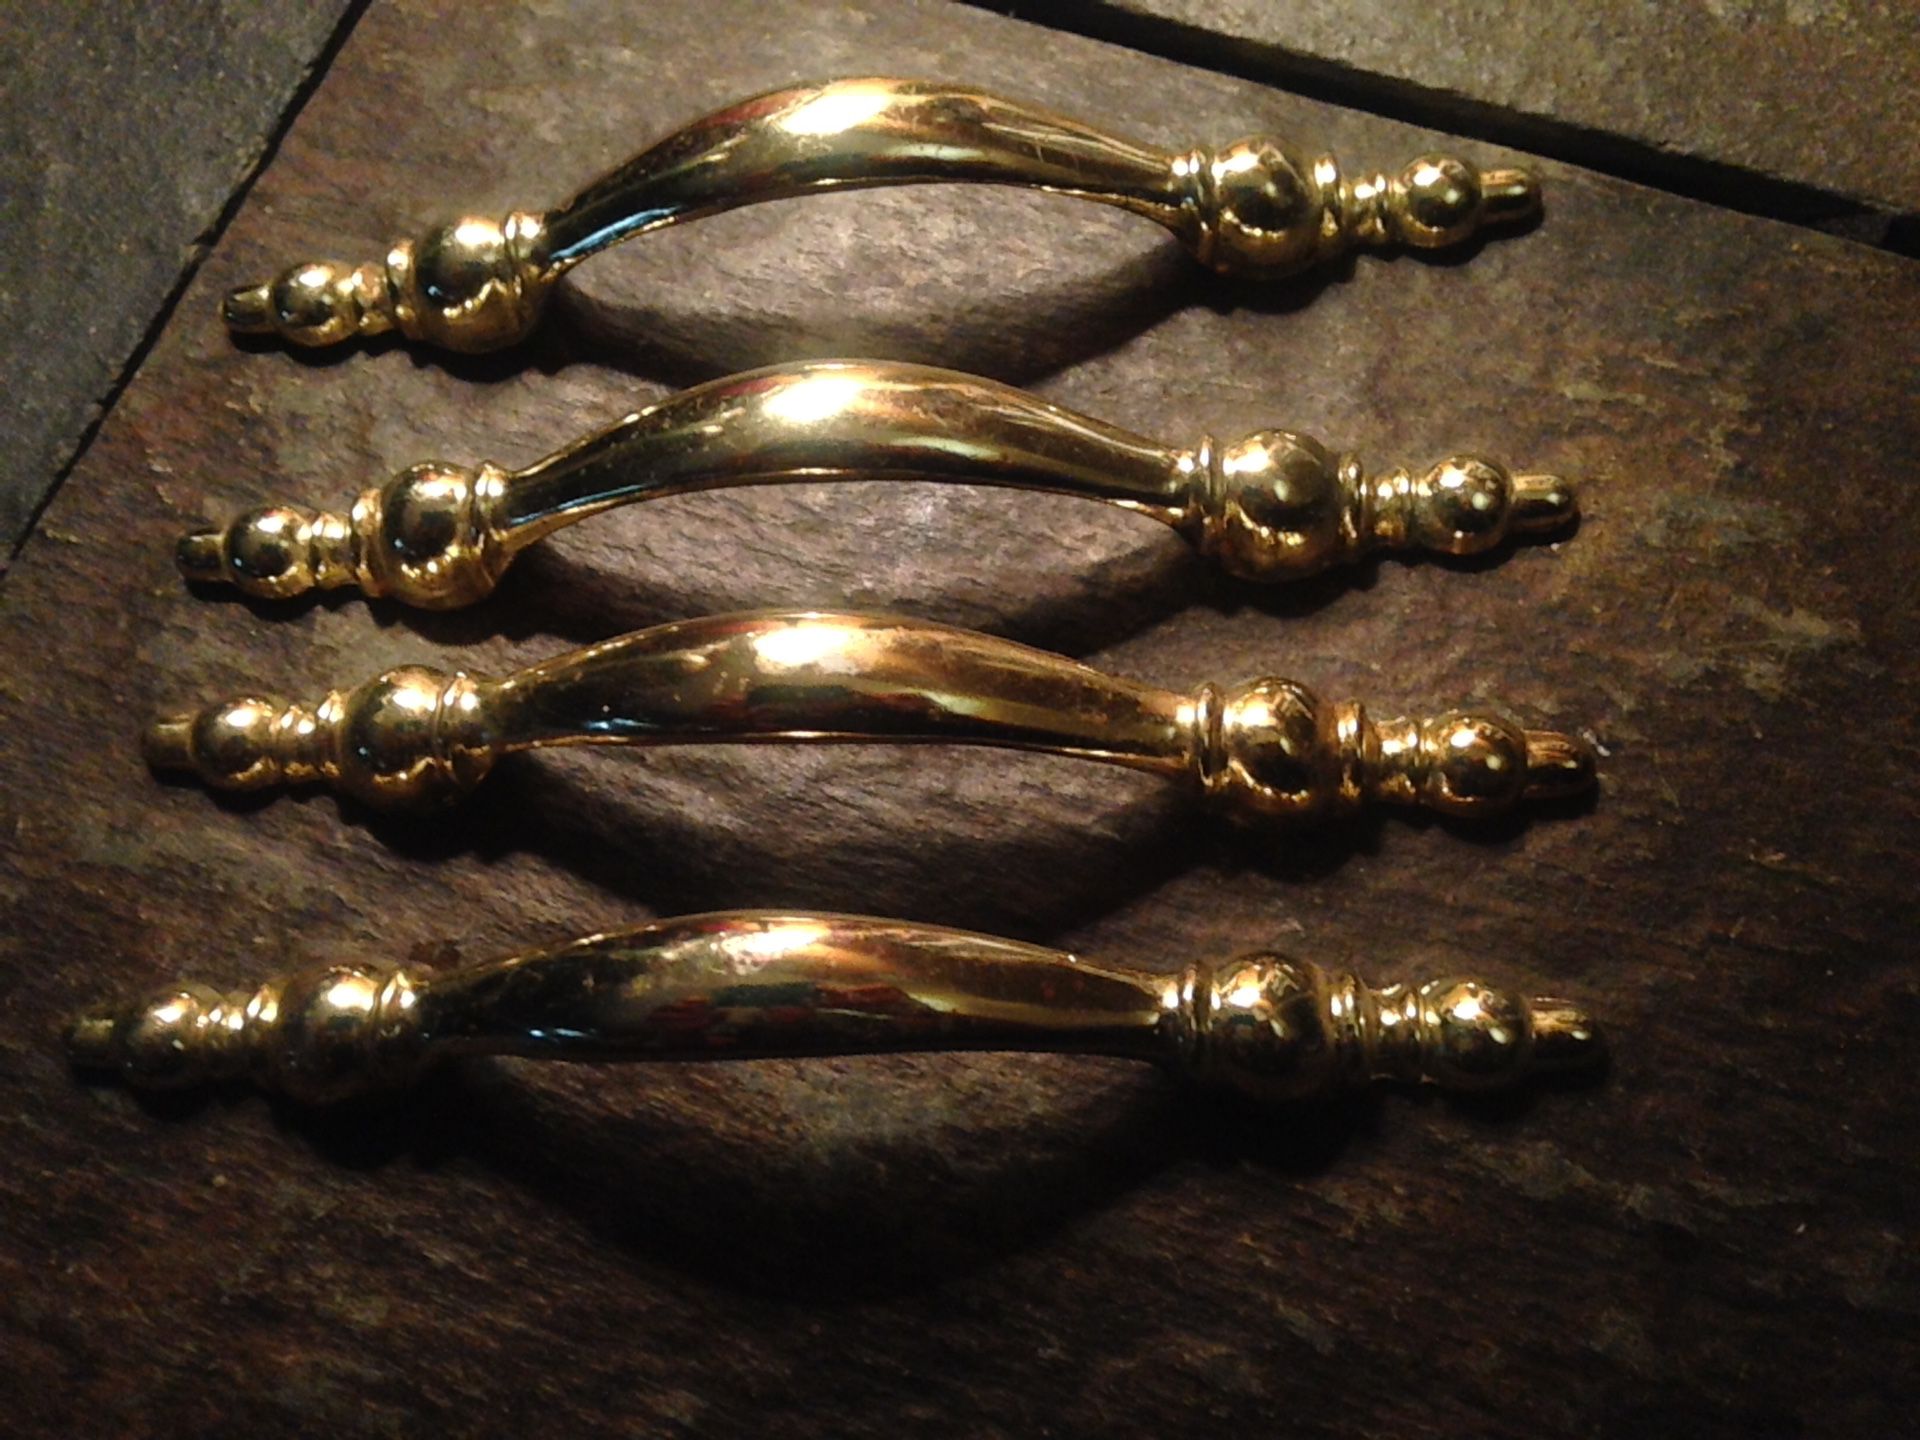 Gold kitchen metal handles 21 pieces